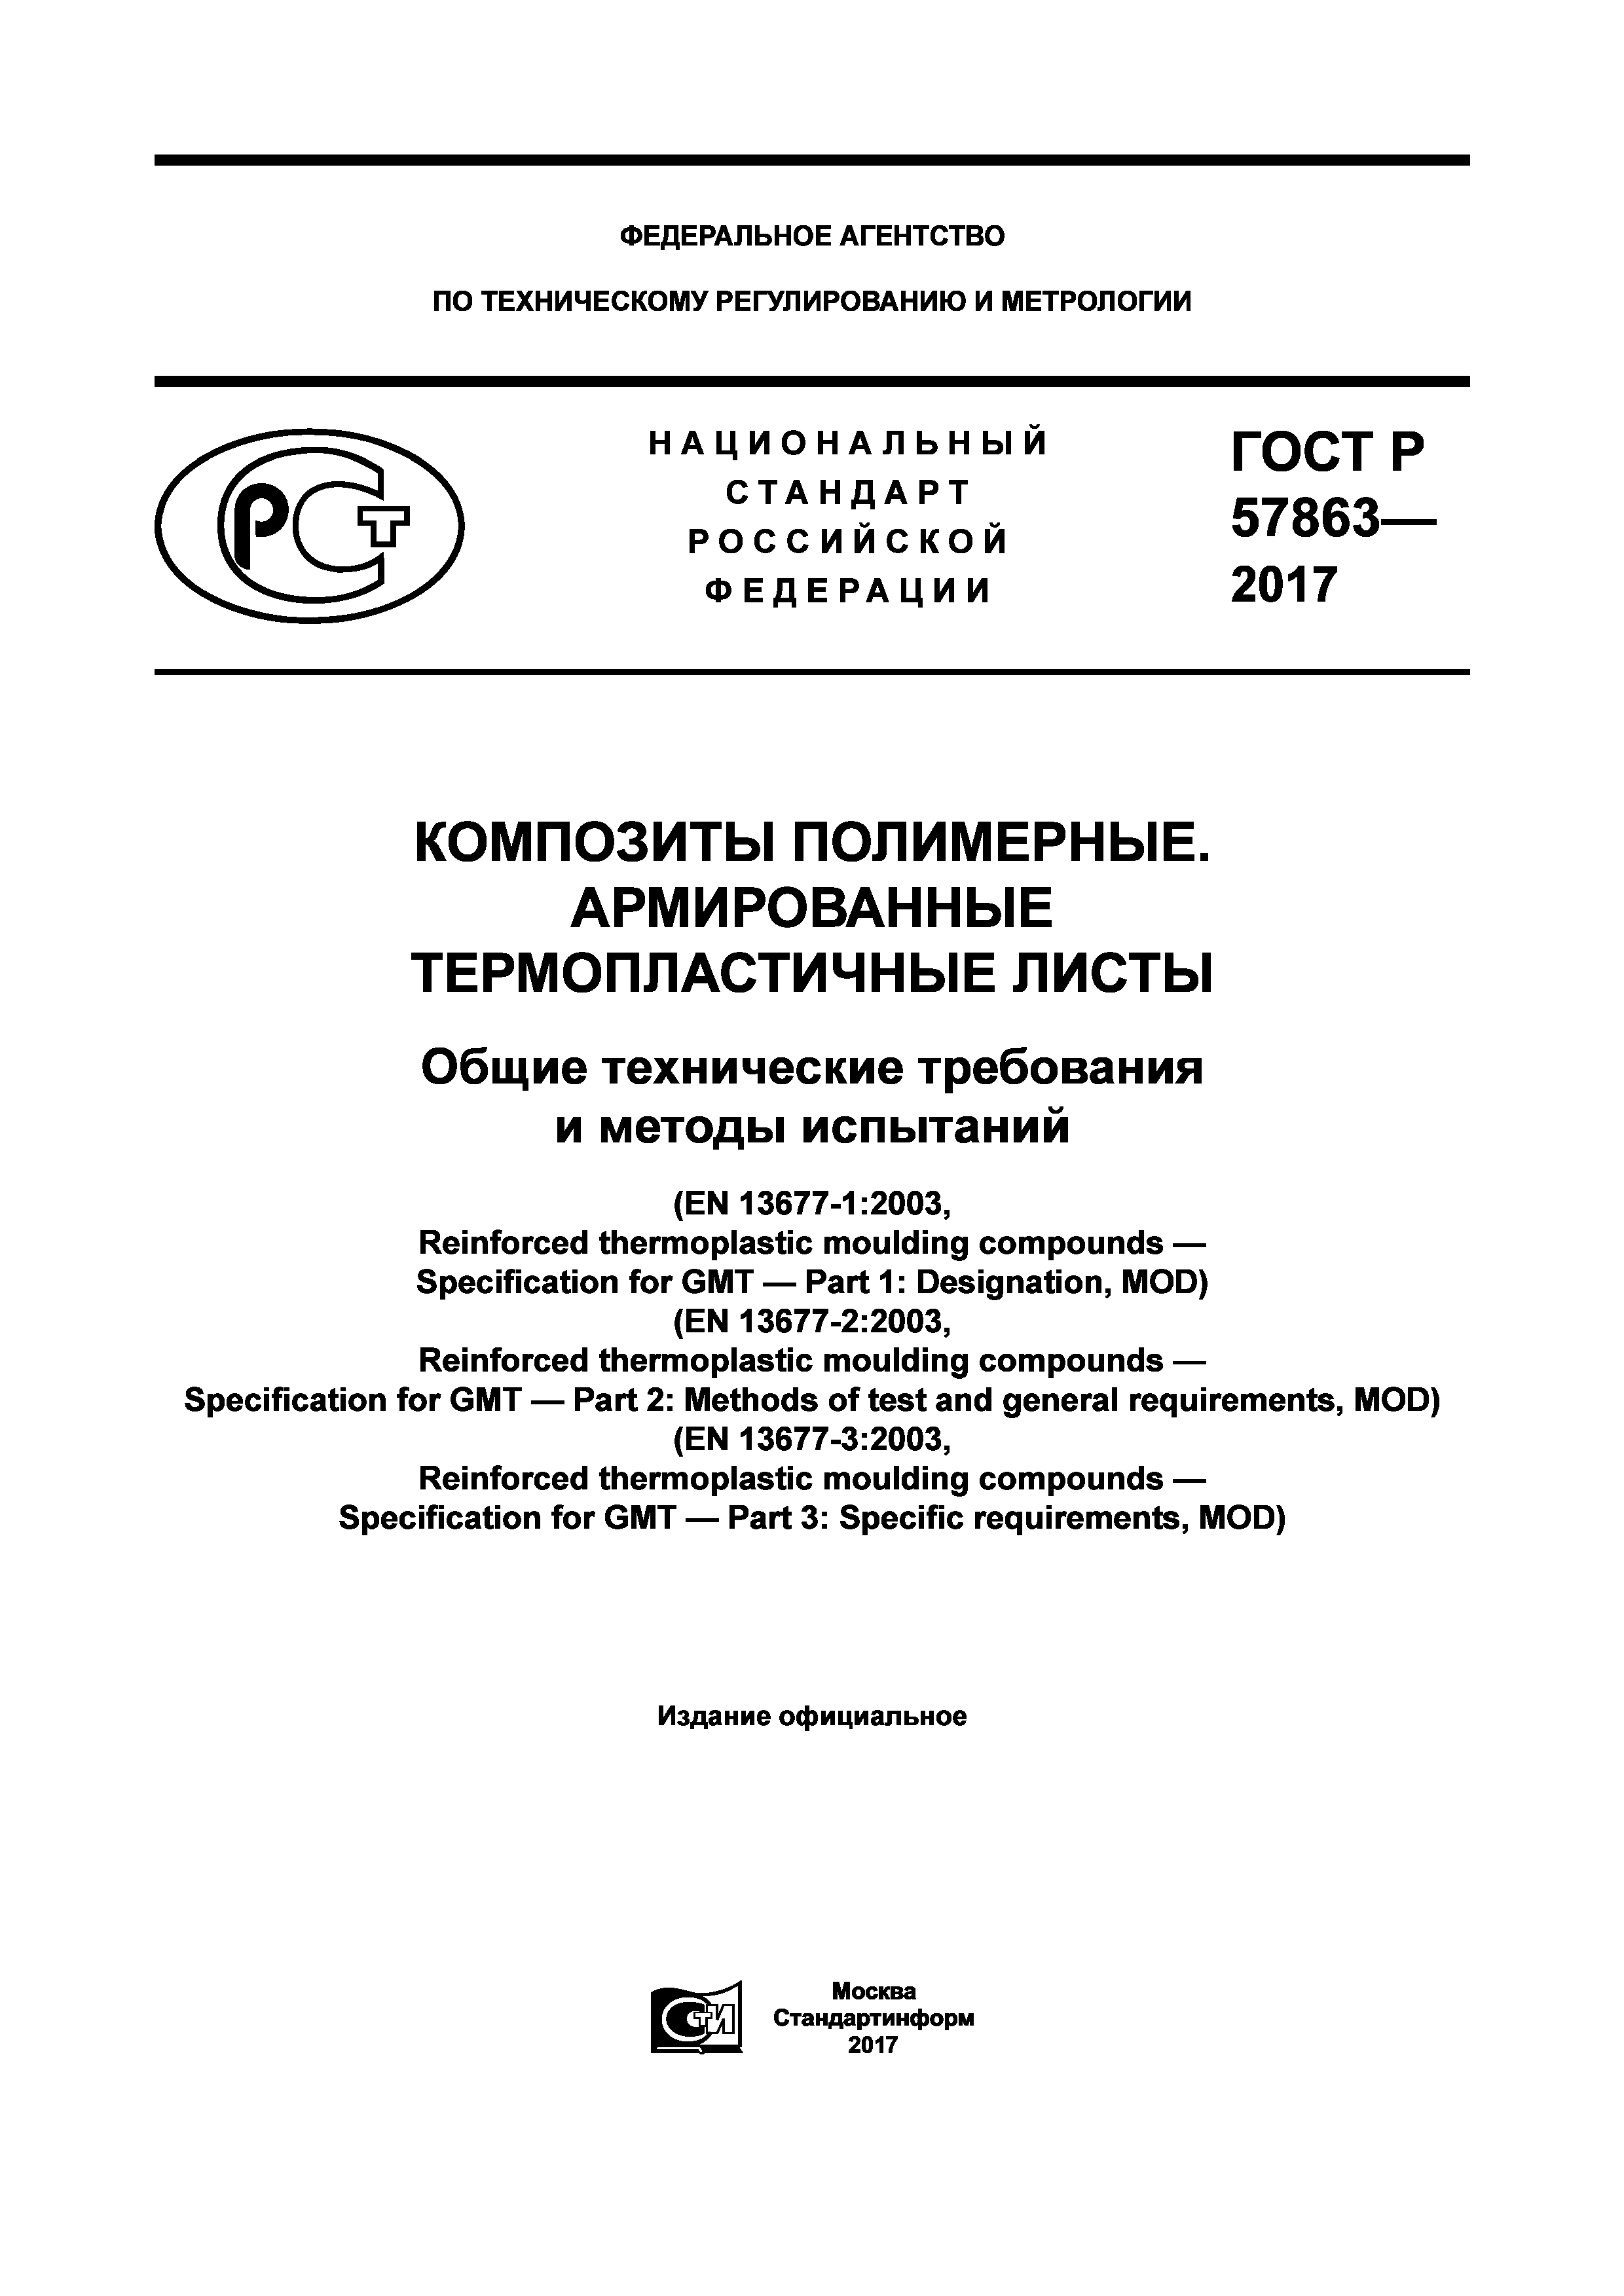 ГОСТ Р 57863-2017